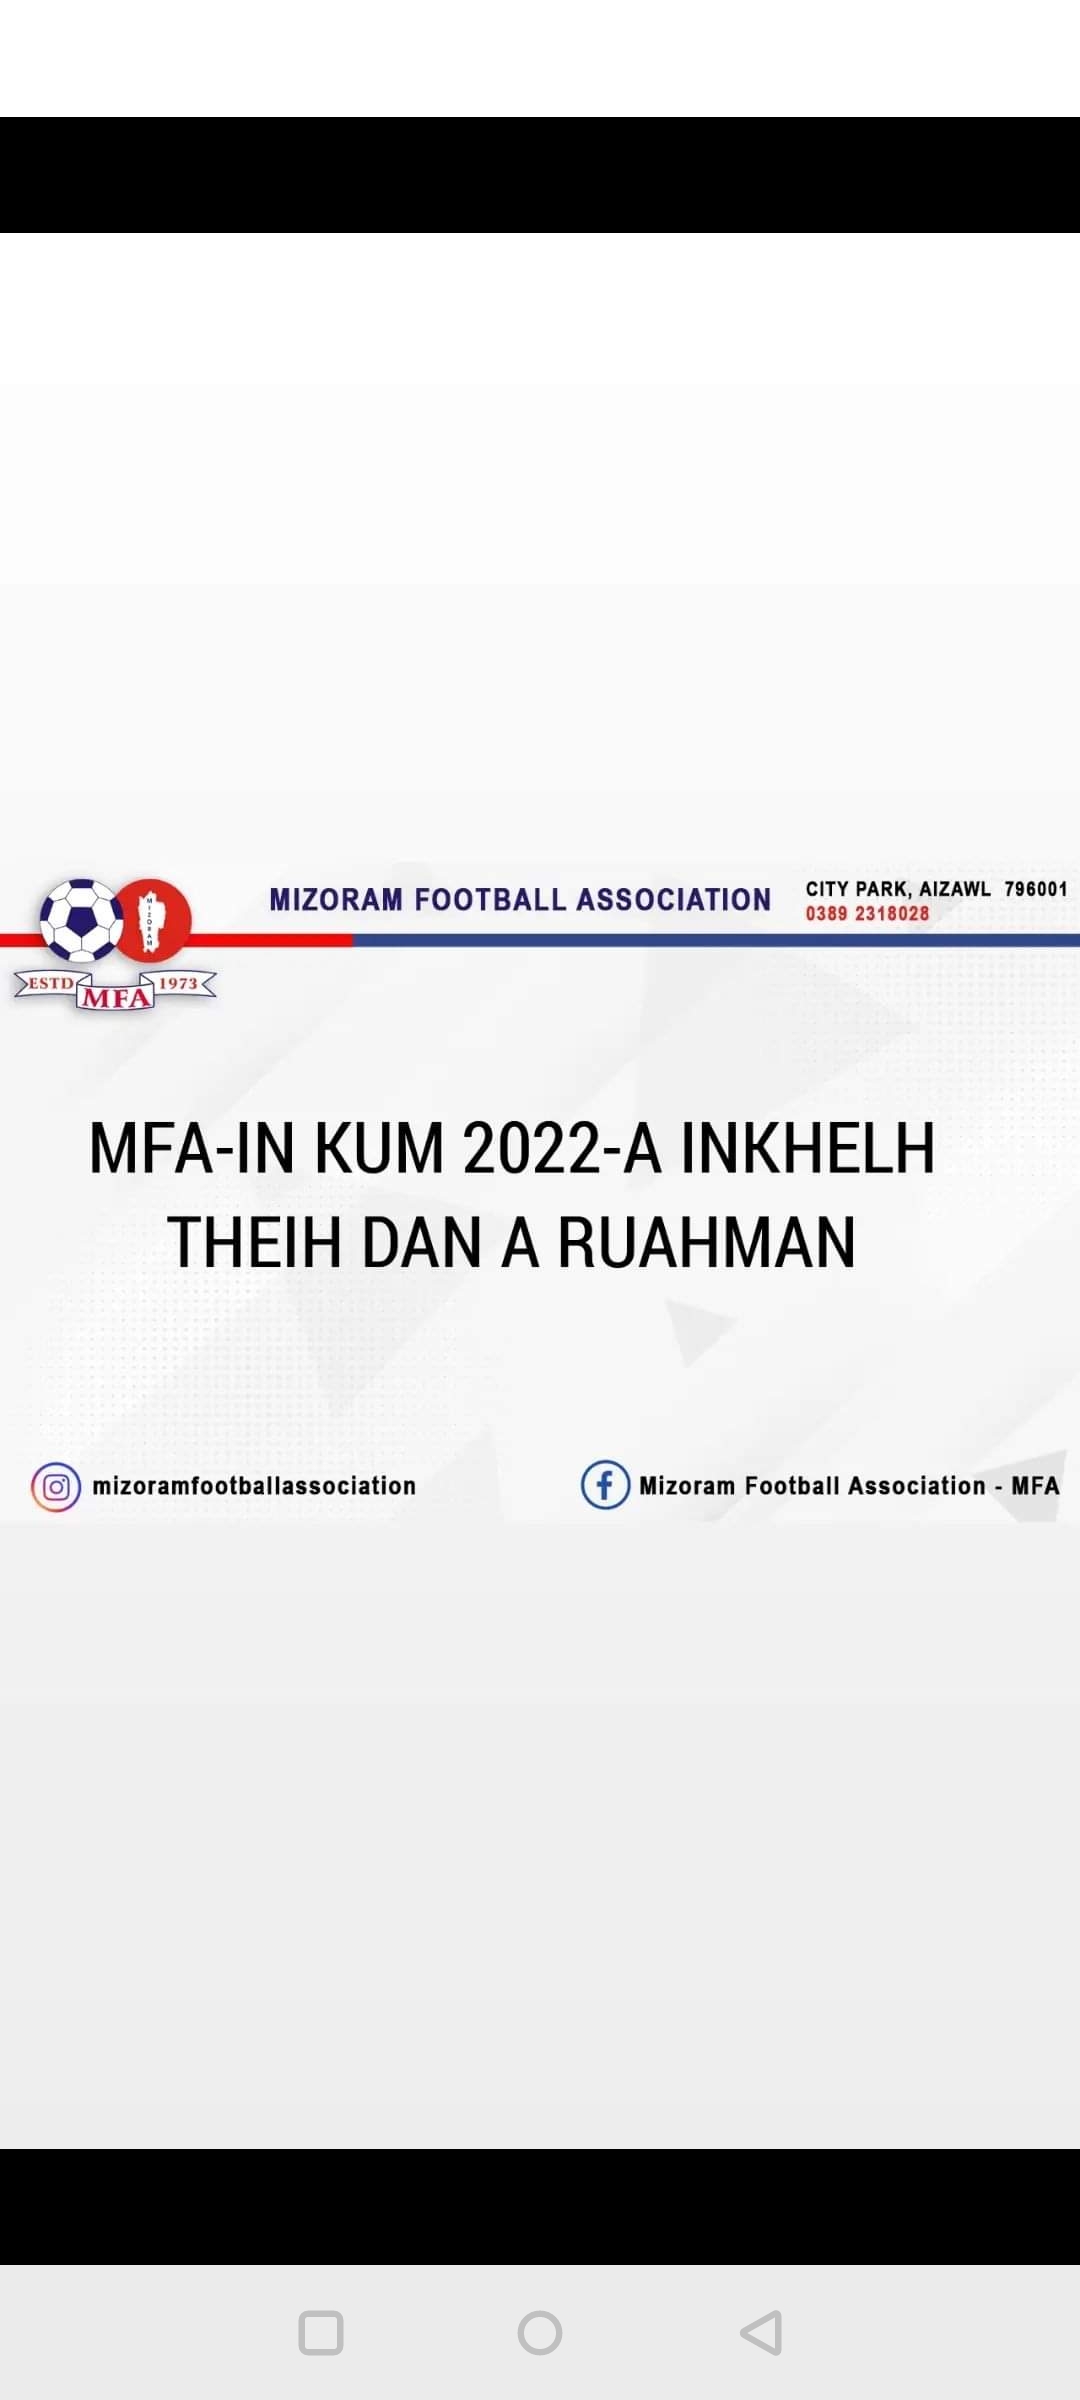 MFA-in kum 2022-a inkhelh theih dan a ruahman